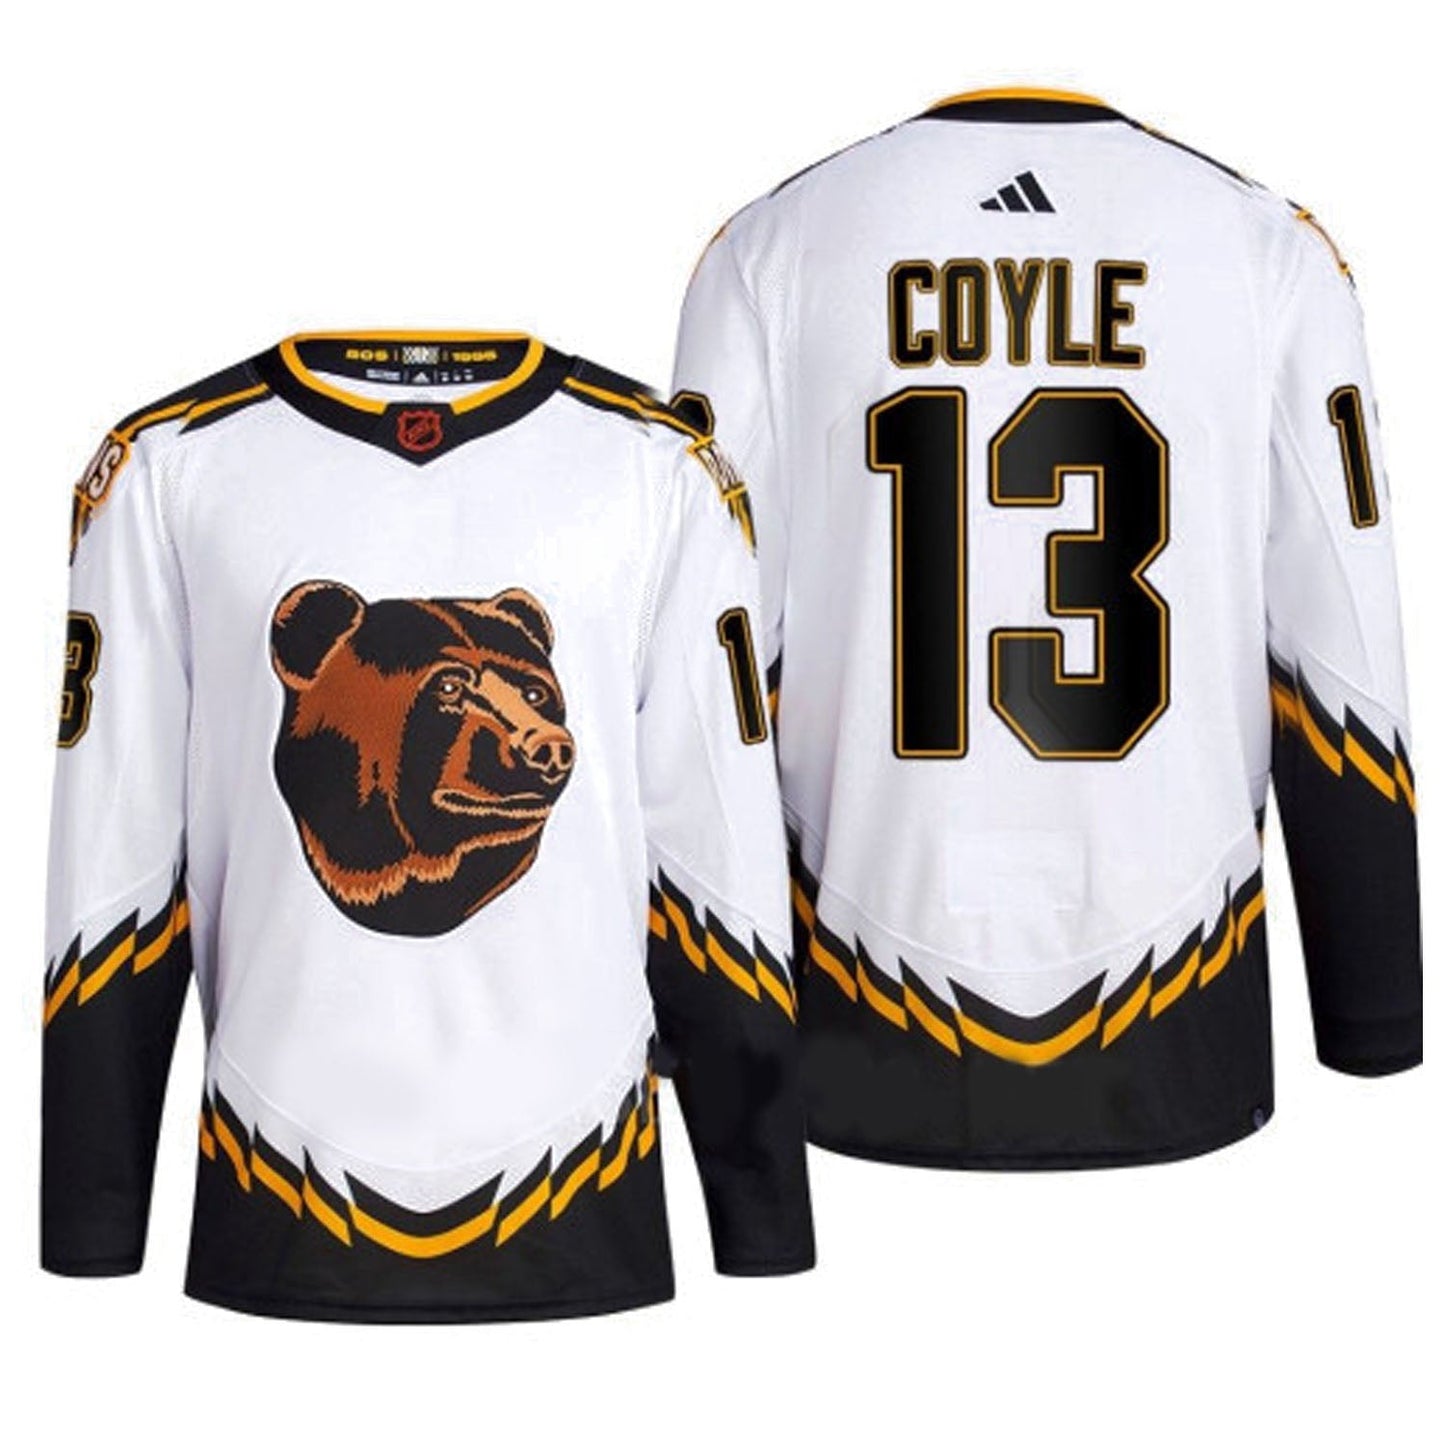 NHL Charlie Coyle Boston Bruins 13 Jersey